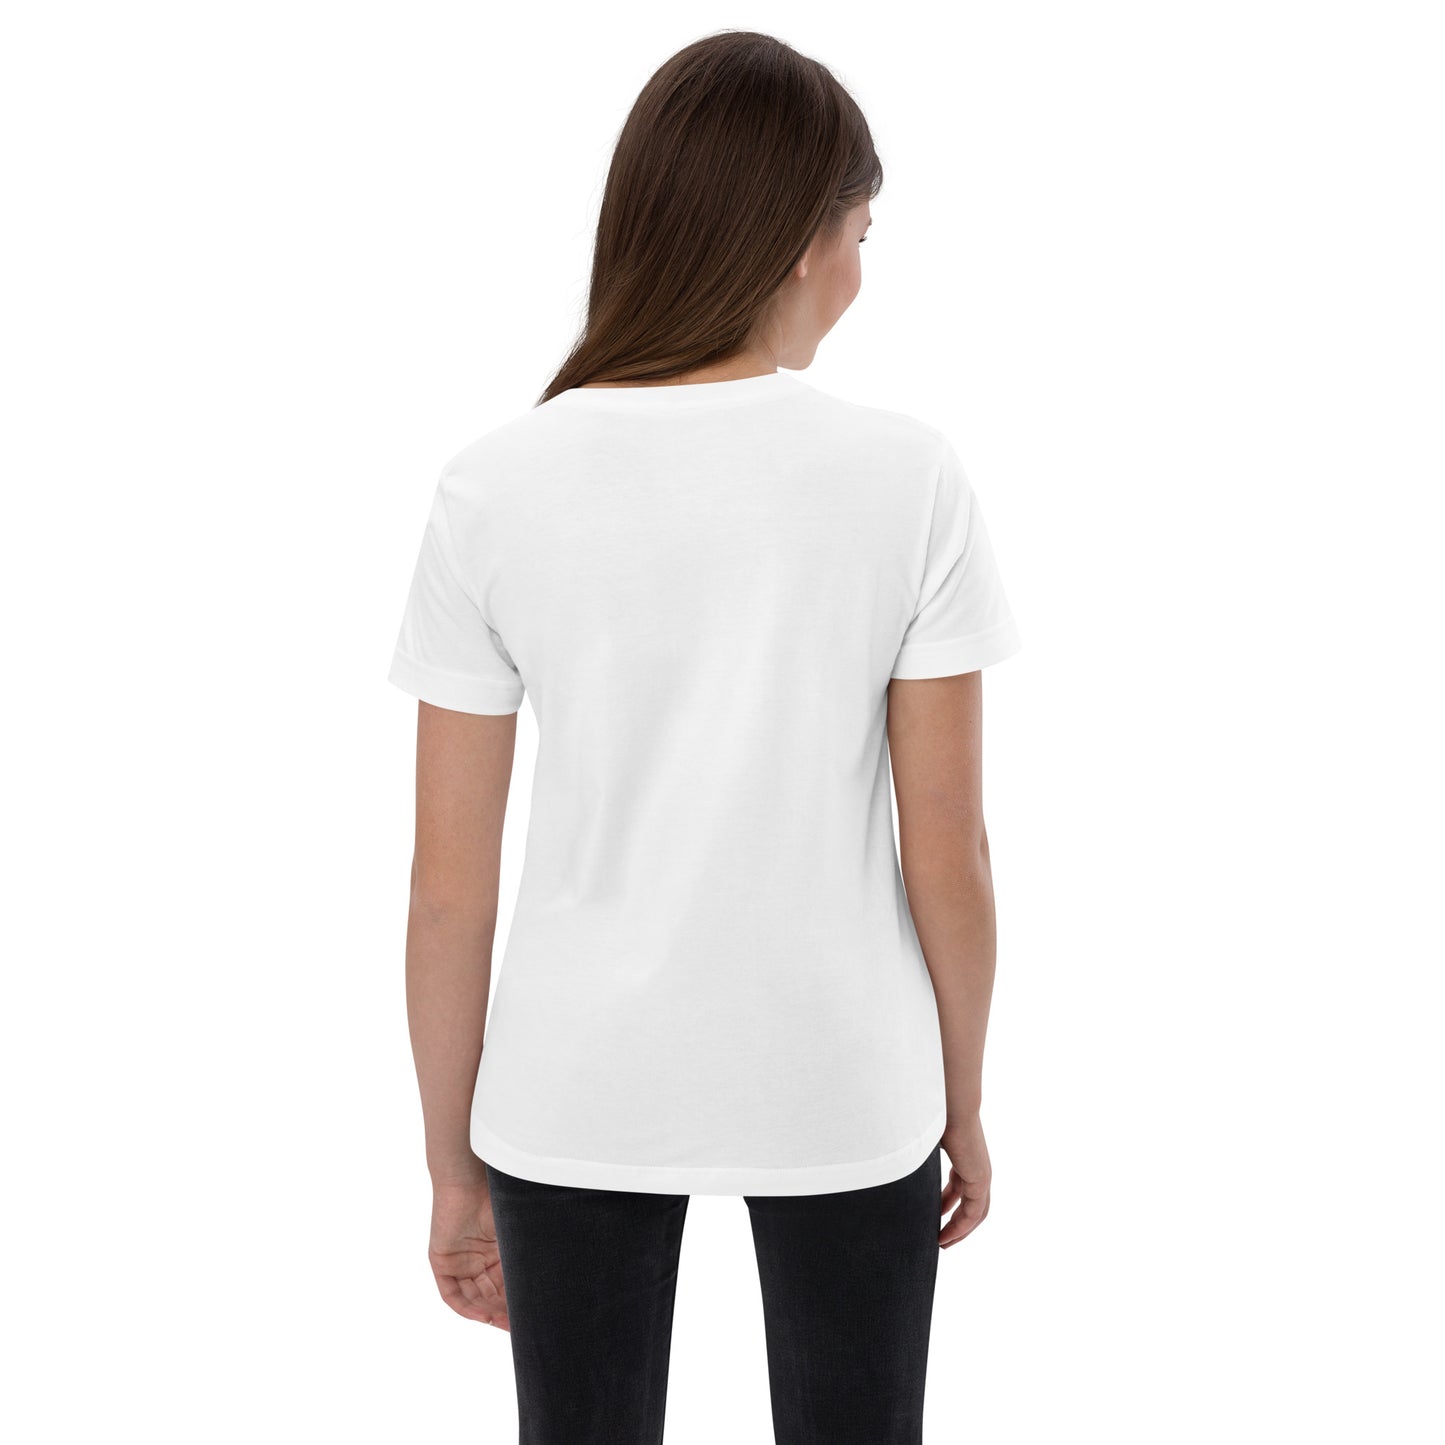 Youth Jersey T-Shirt|Gallery La La|Girls